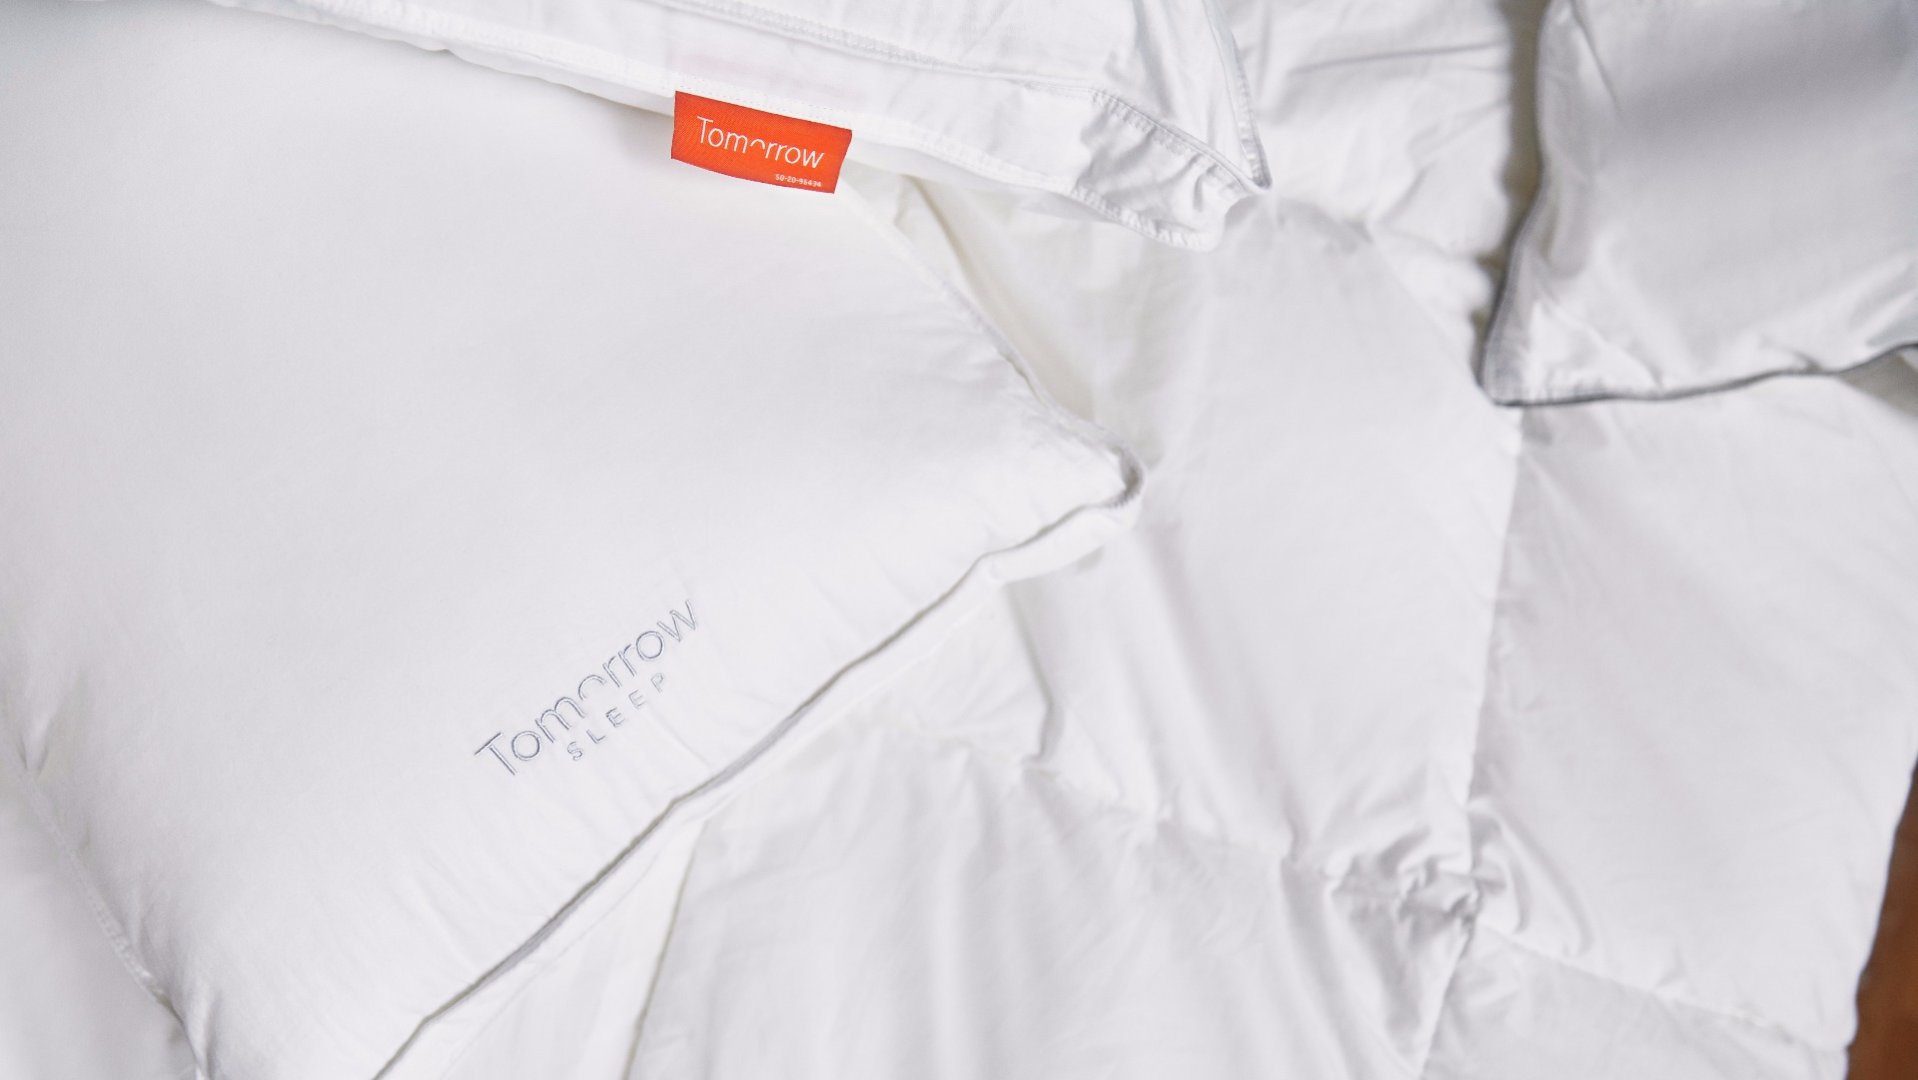 Tomorrow Sleep Hypoallergenic Toxin-Free Pillow $75 